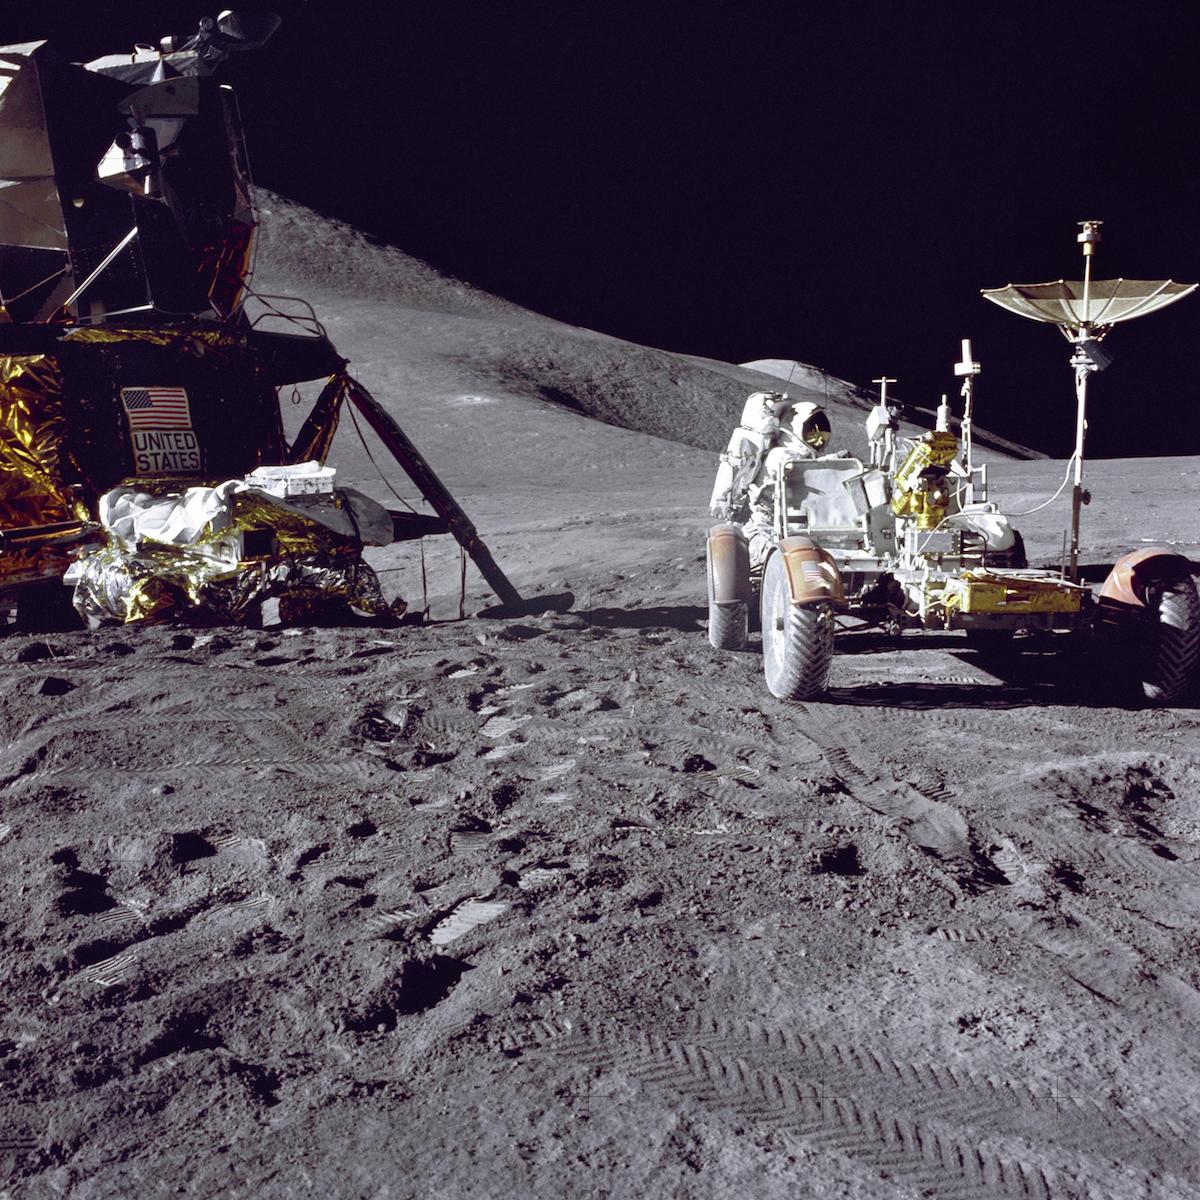 astronaut loading gear into lunar rover near lunar module